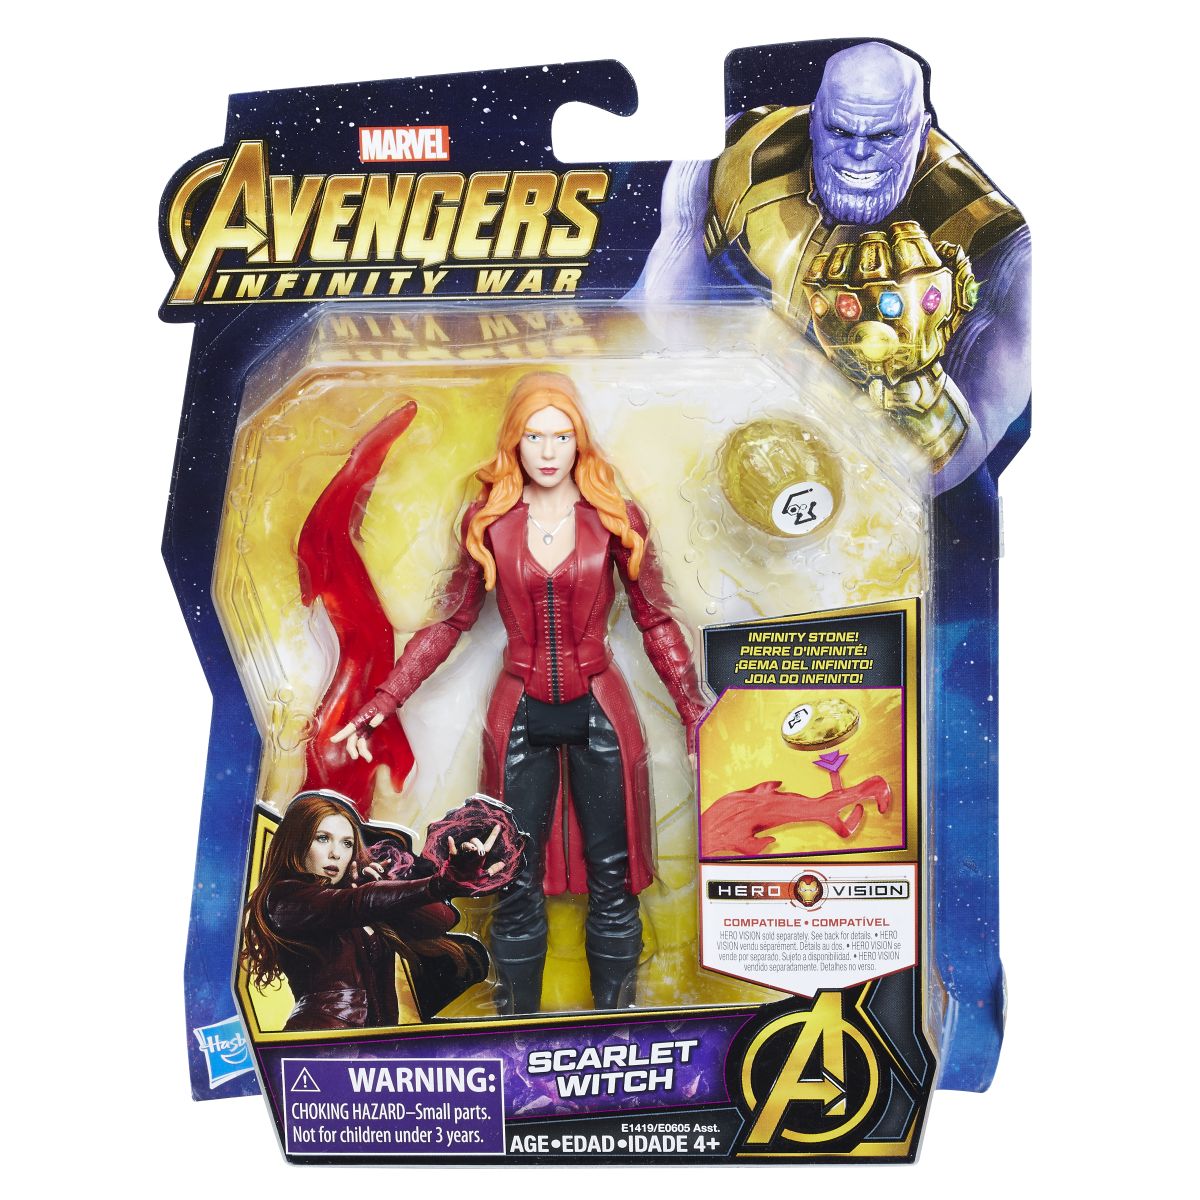 Marvel Avengers Infinity War 6 Inch Figure Assortment Scarlet Witch In Pkg